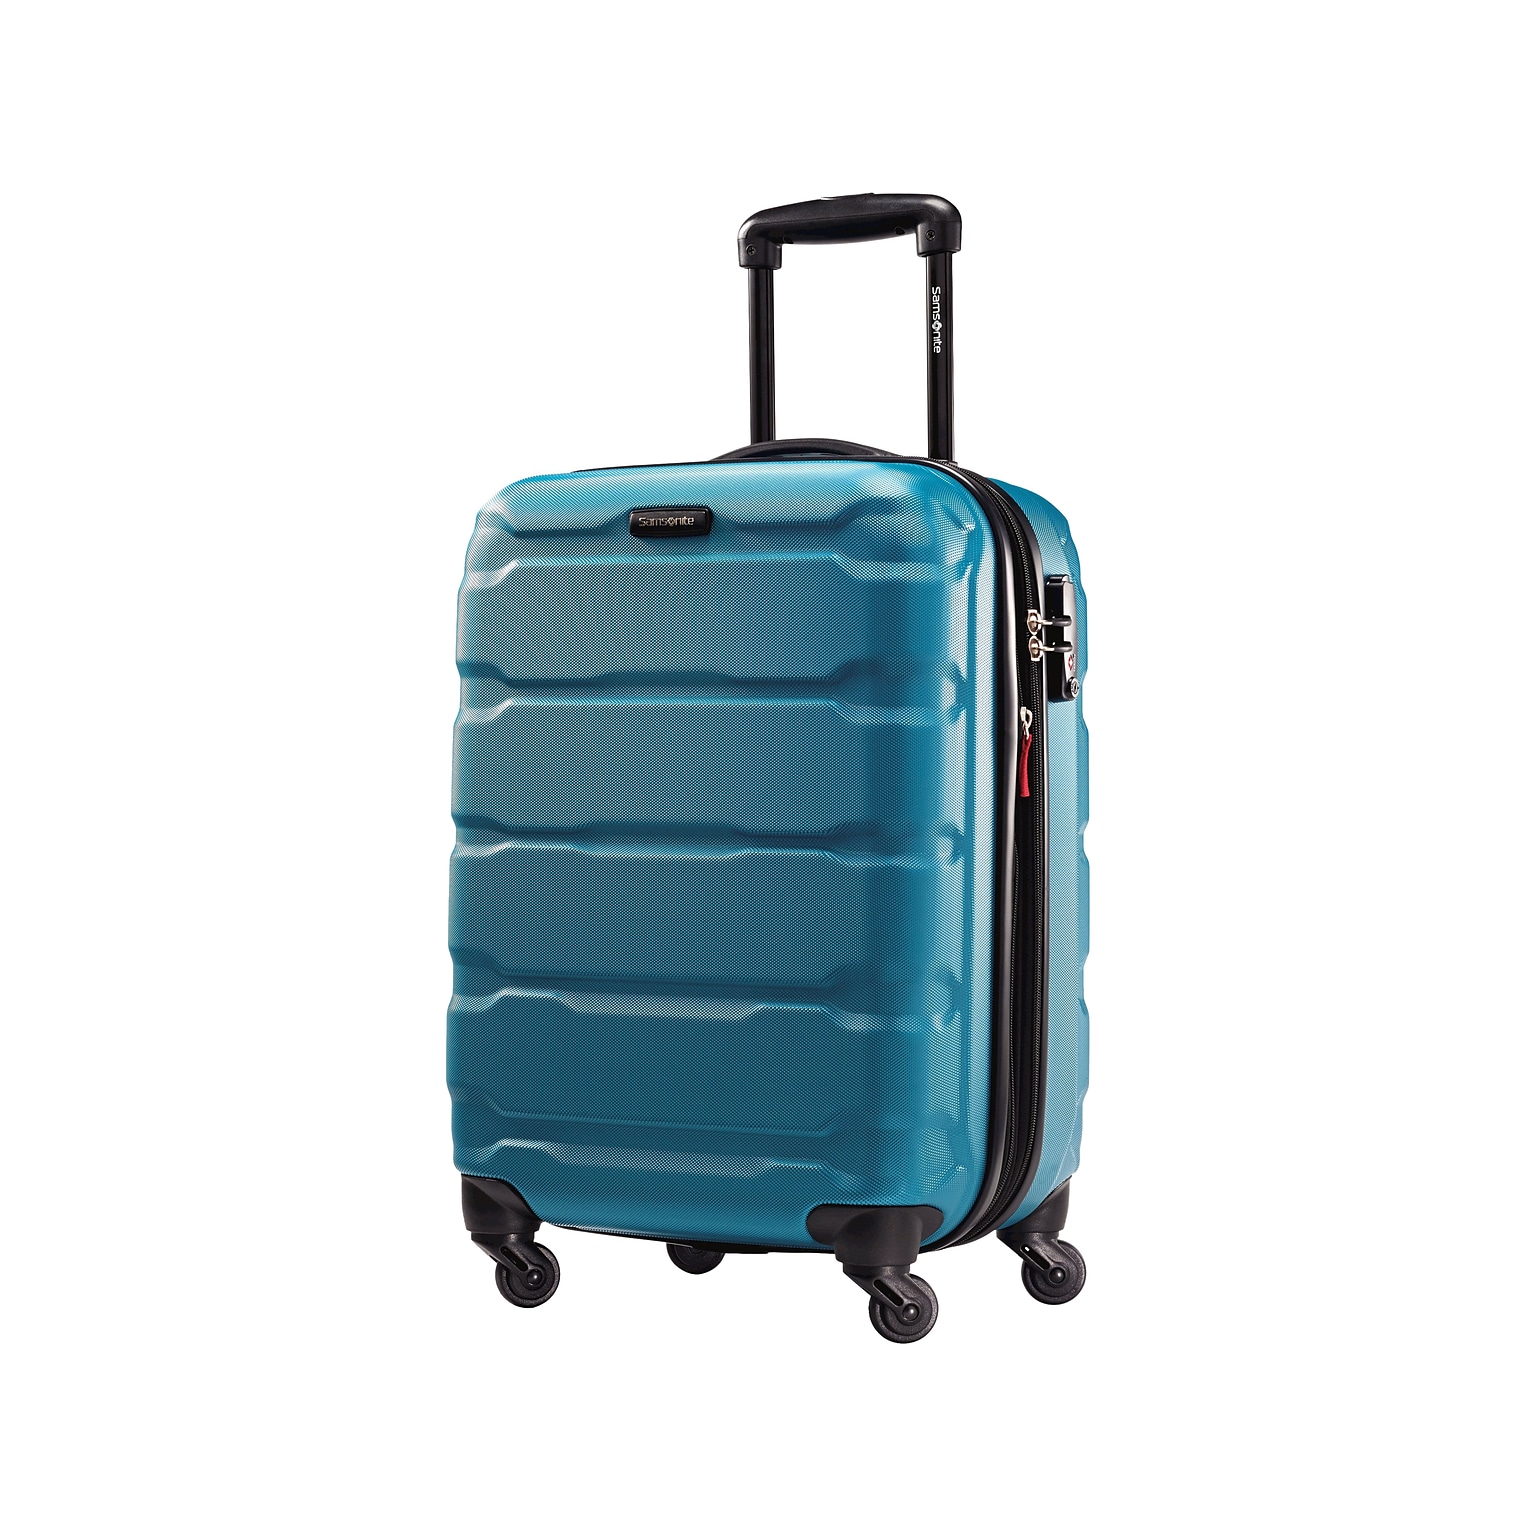 Samsonite Omni PC Polycarbonate Carry-On Luggage, Caribbean Blue (68308-2479)